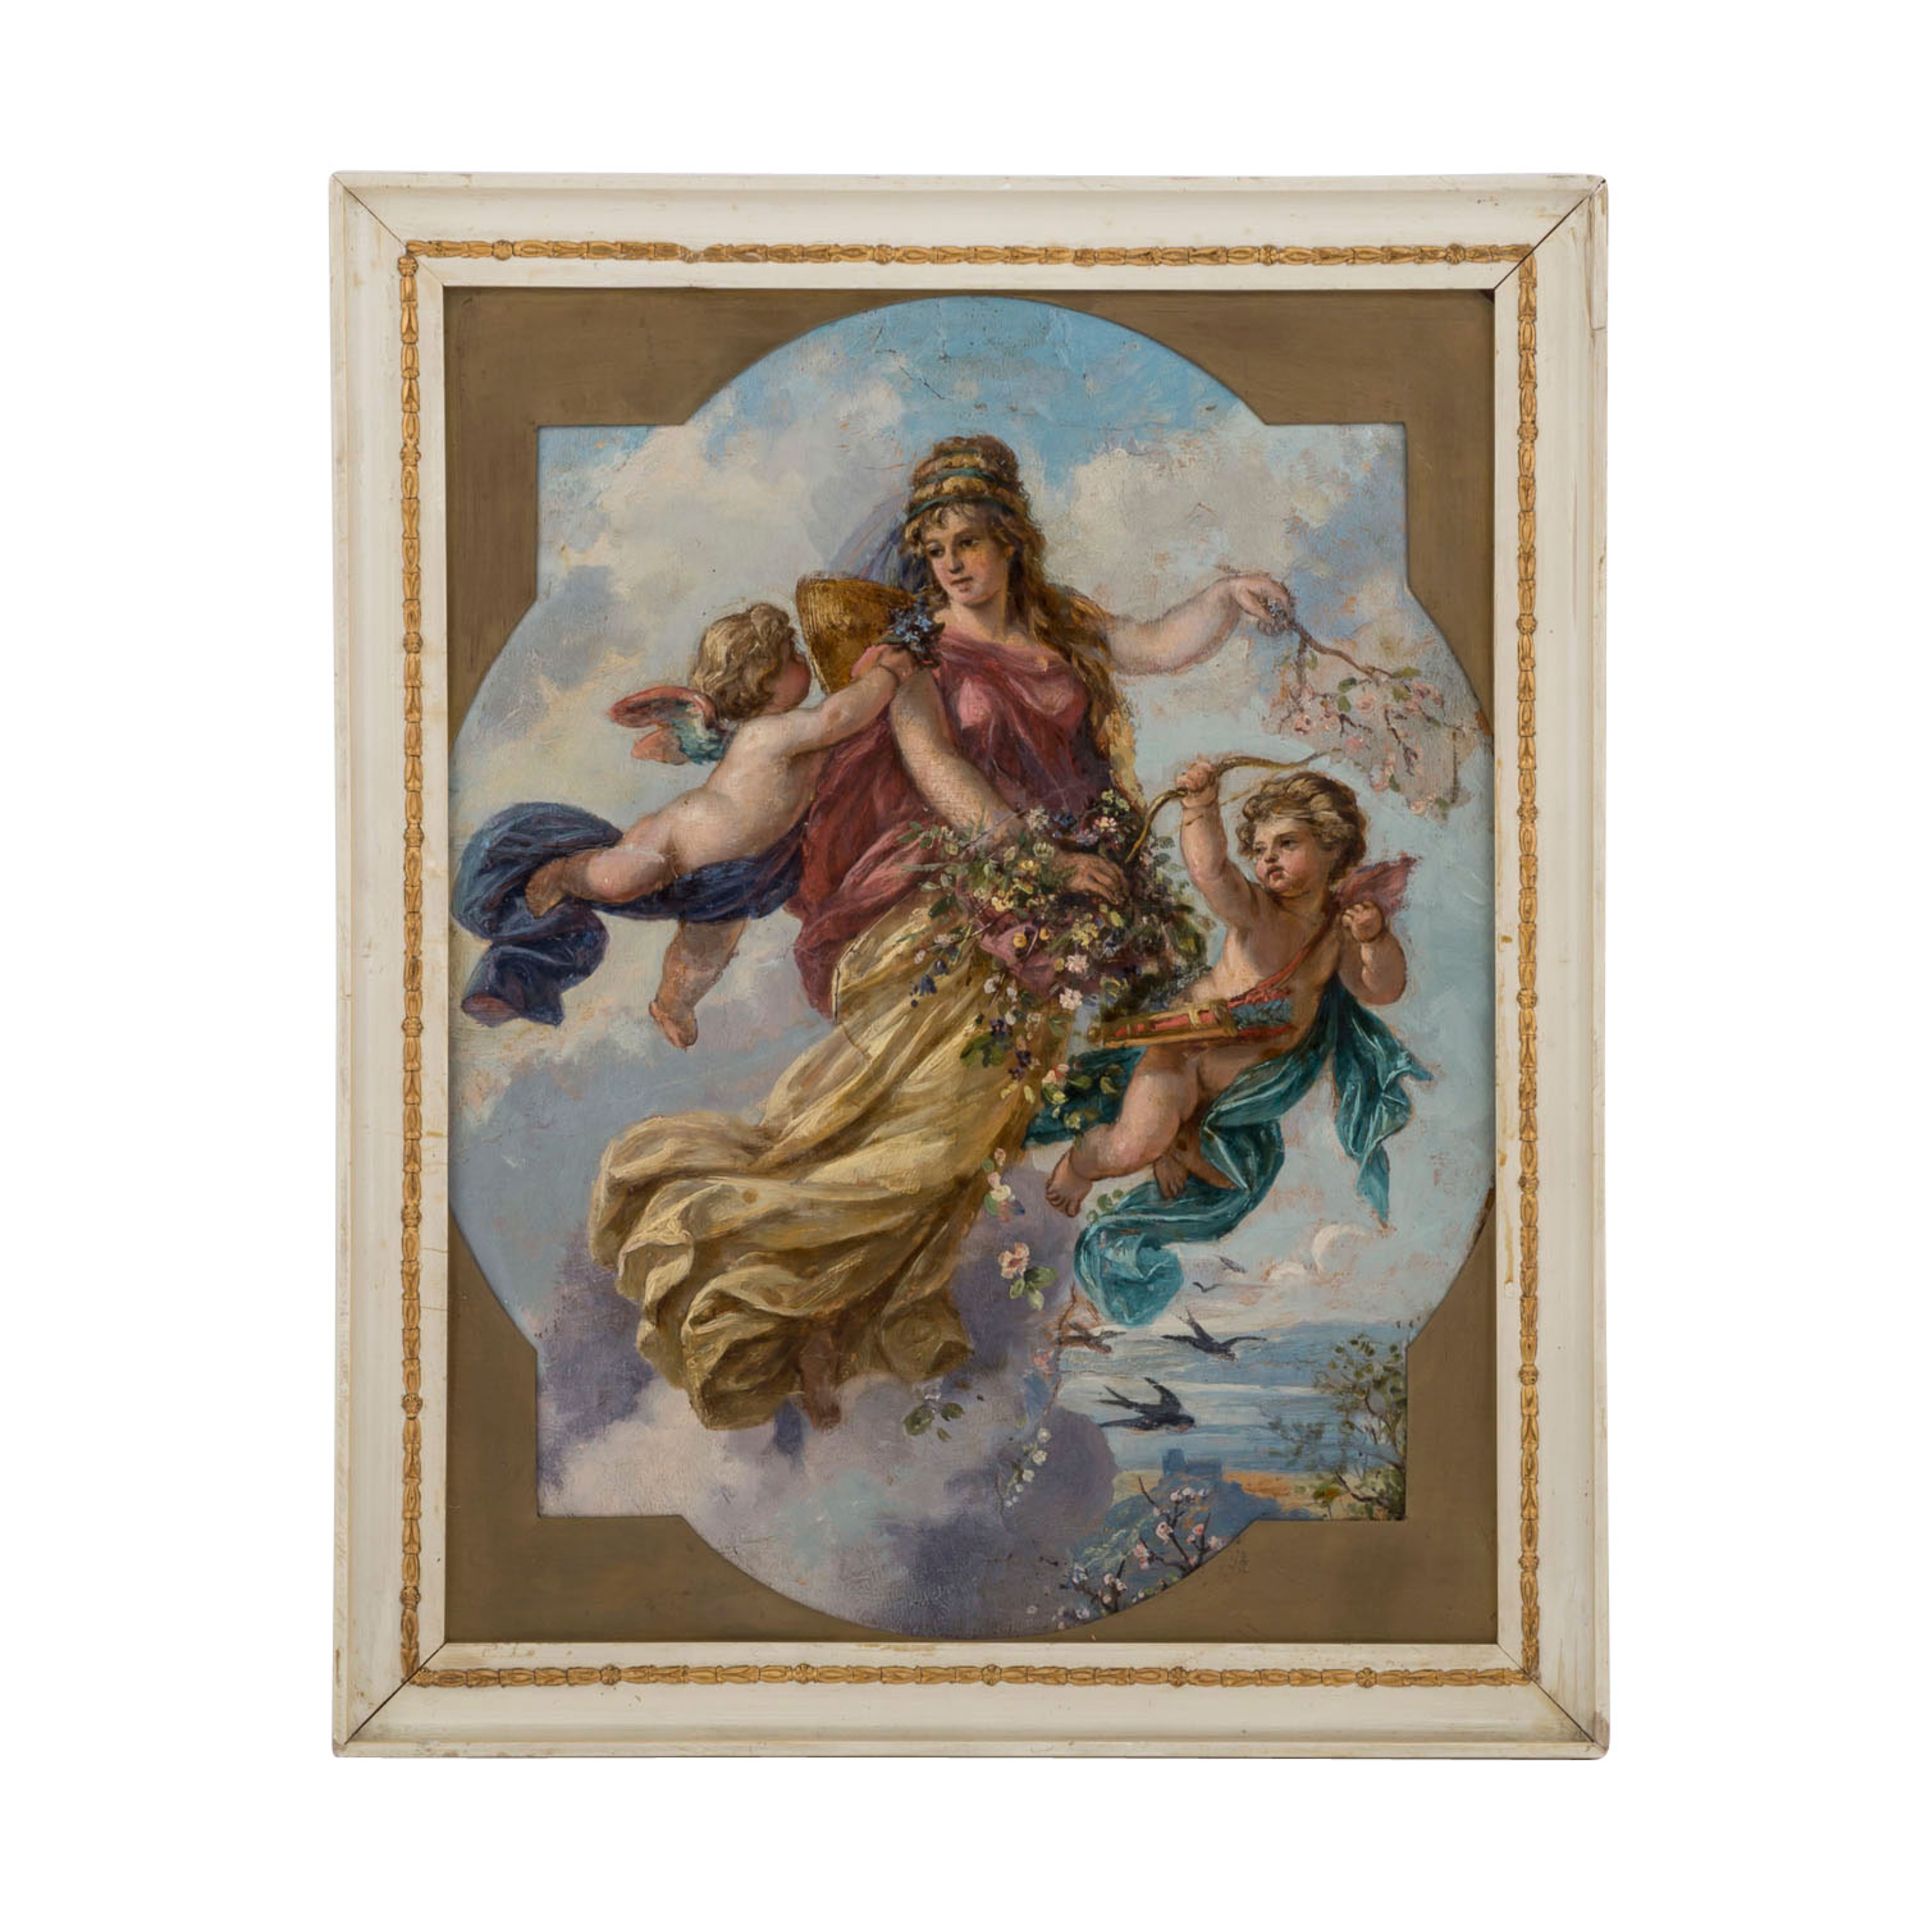 Unbekannte(r) Künstler(in) des 19./20. Jh. 'Venus als Frühlingsgöttin', um 1900.Öl/Papier/Karton, - Bild 2 aus 3